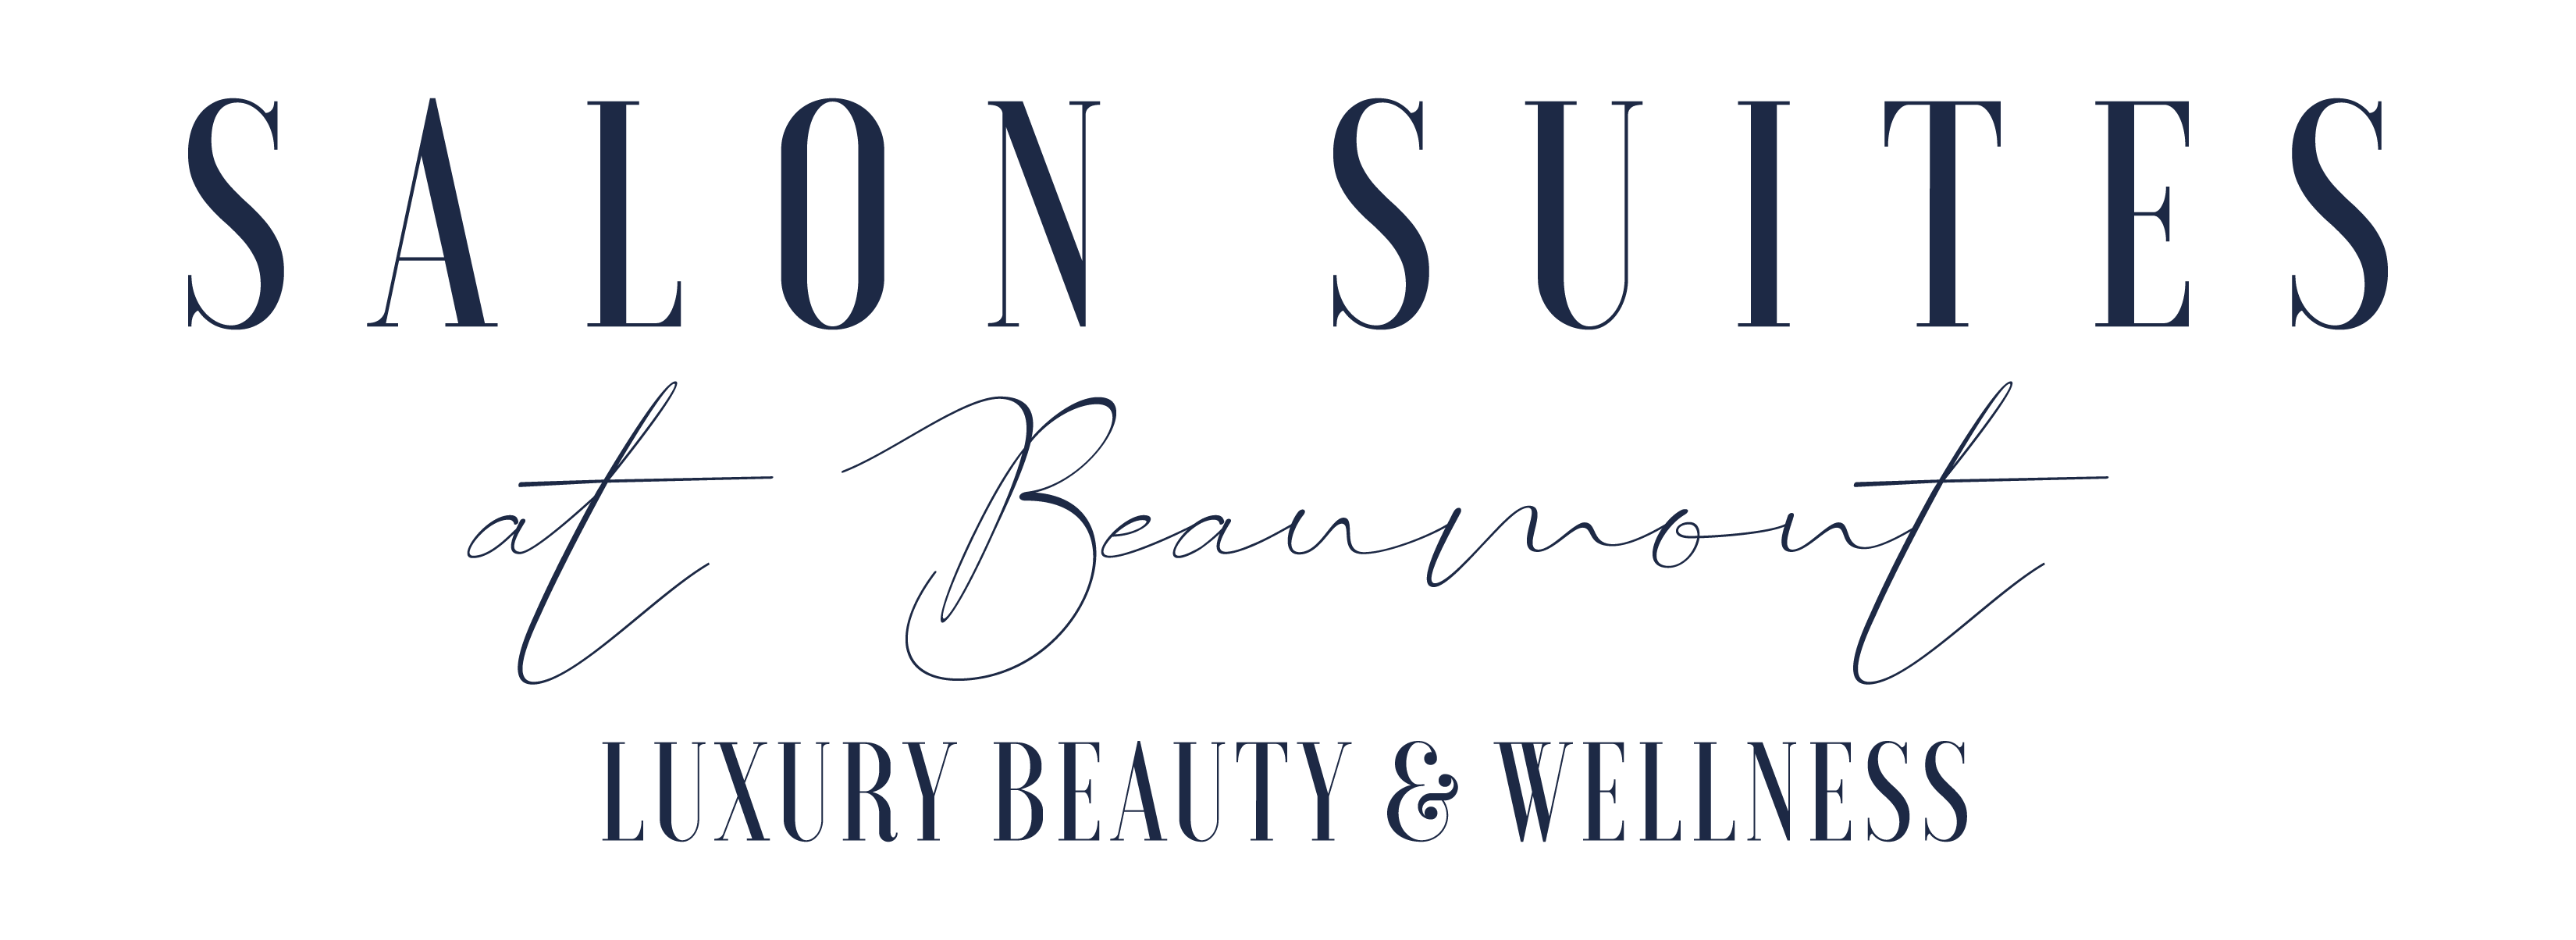 Salon Suites At Beaumont Lexington KY Luxury Beauty and Wellness